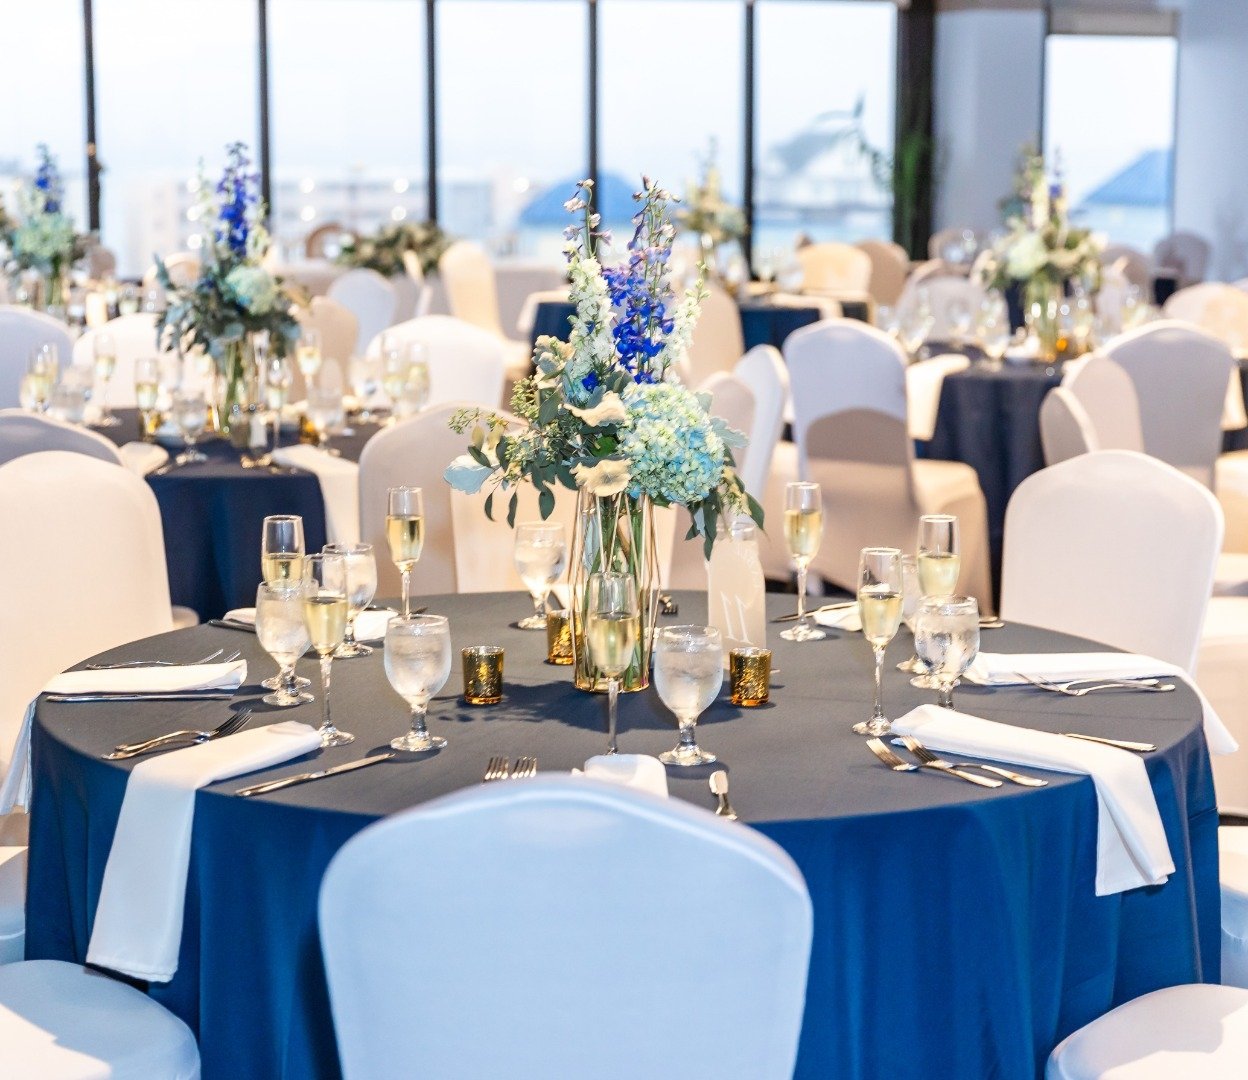 wedding seating in event room overlooking bay